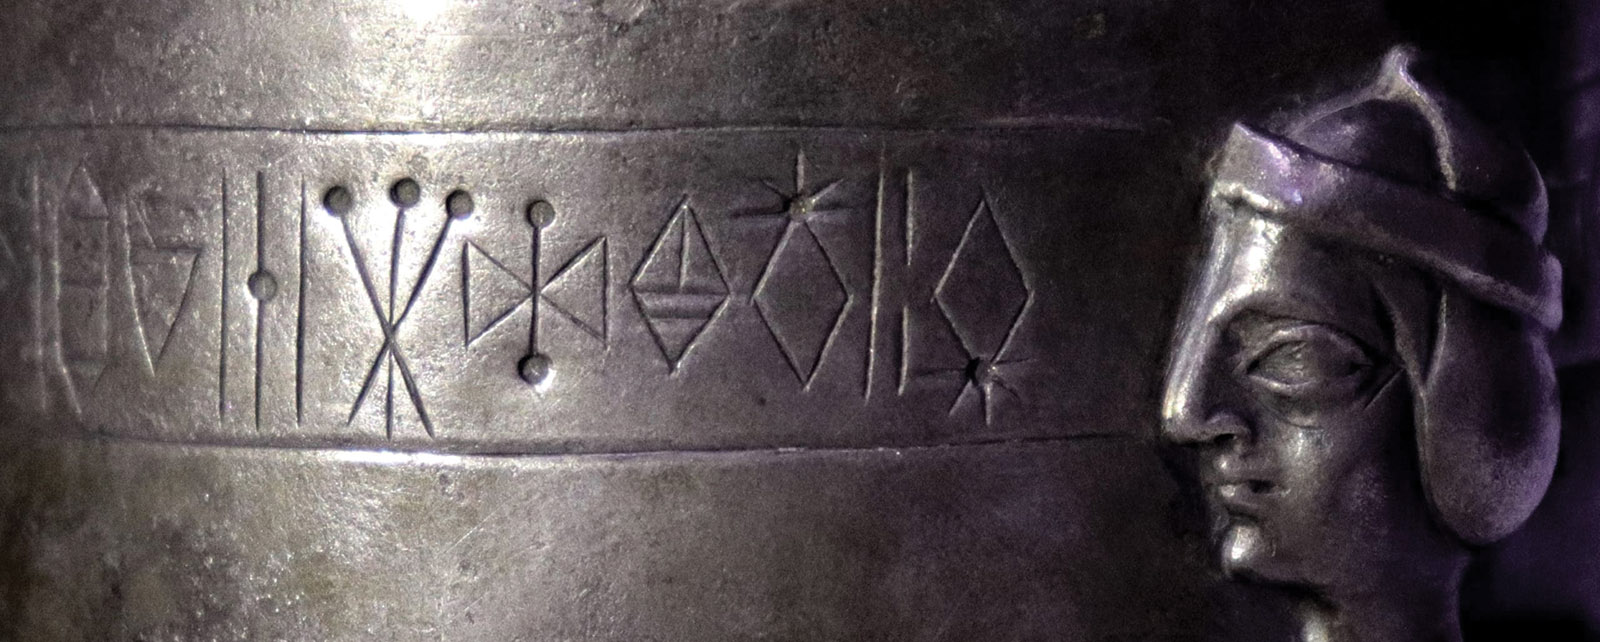 Linear Elamite text on a silver vessel found at Marv Dasht, Iran, late third millennium BCE